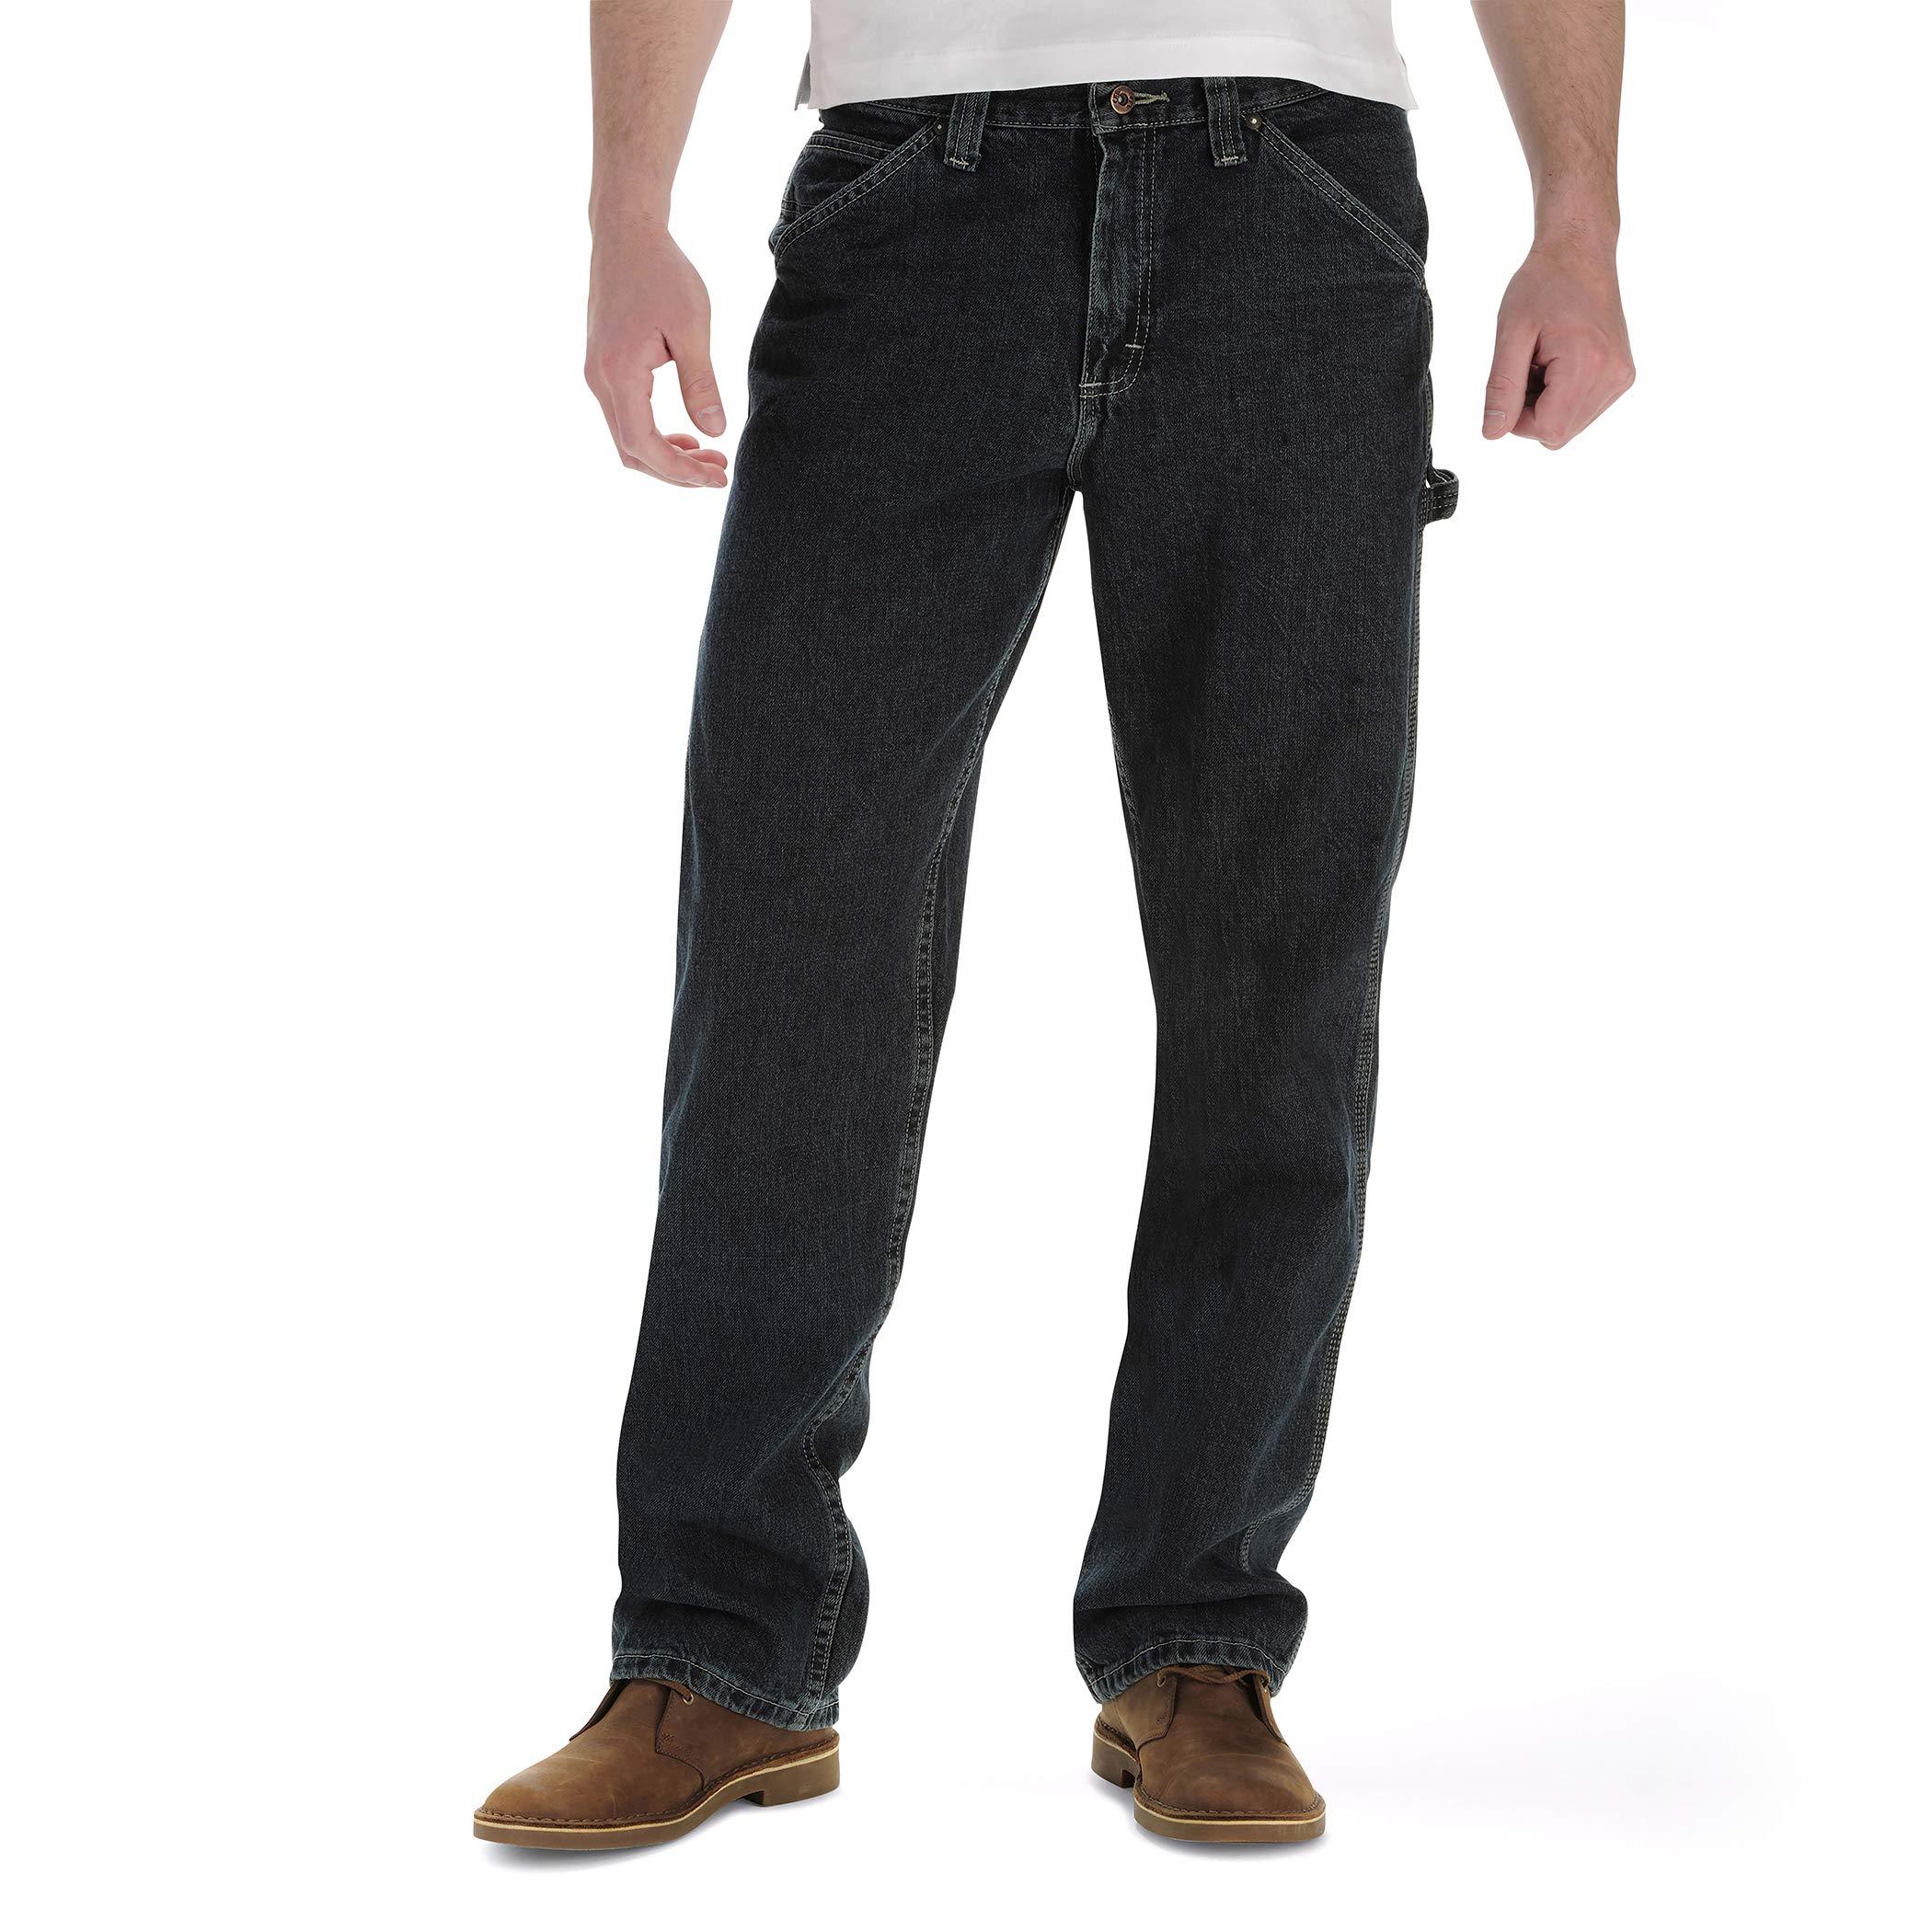 Lee Jeans Denim Big-tall Carpenter Jean in Black for Men - Save 5% - Lyst